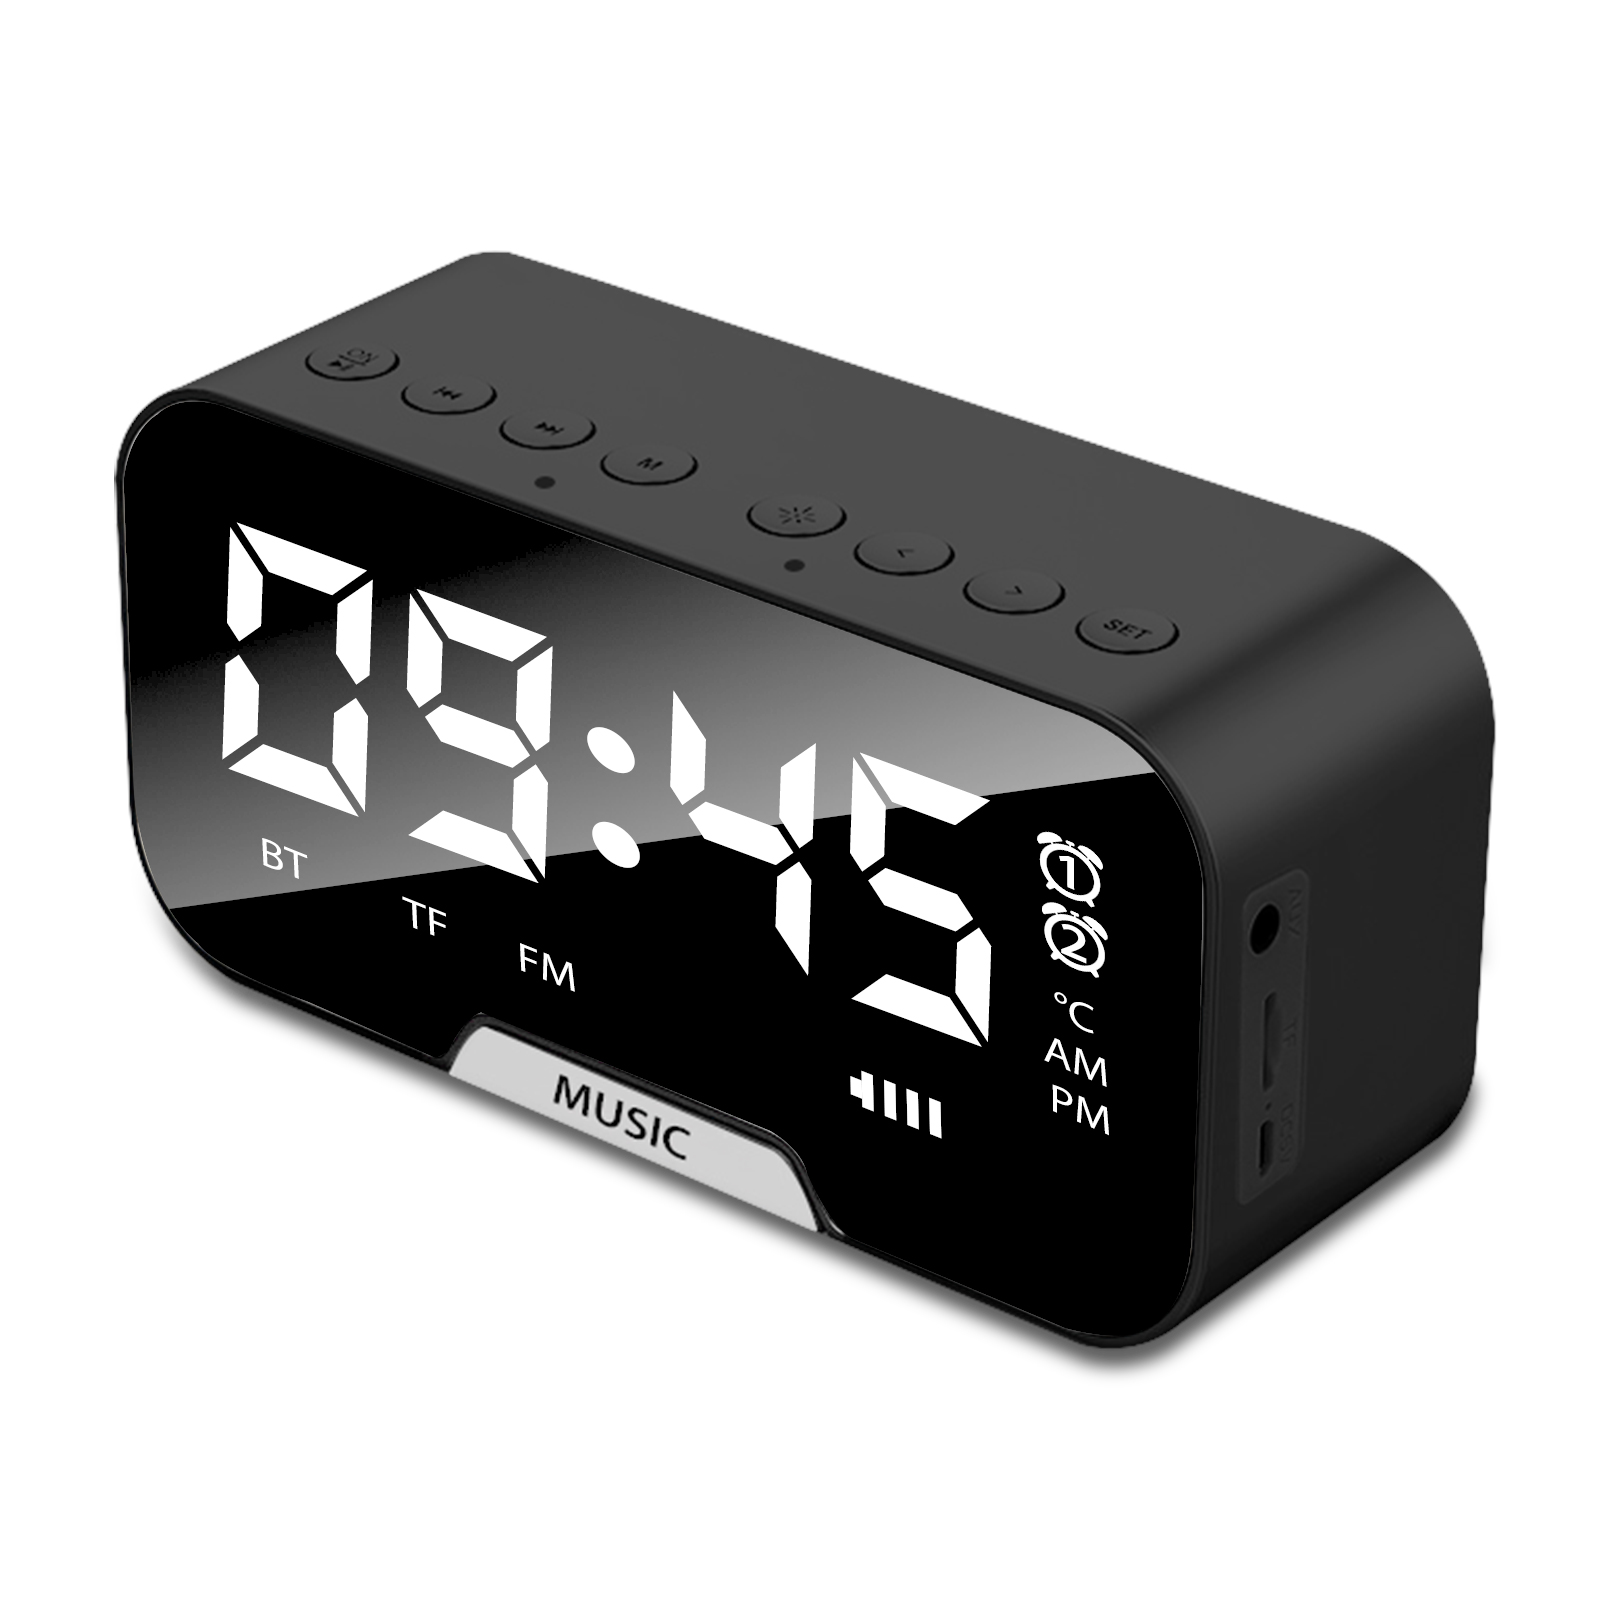 Details about   LED Digital Alarm Clock FM Radio Bluetooth5.0 Speaker USB Charger Mirror Display 